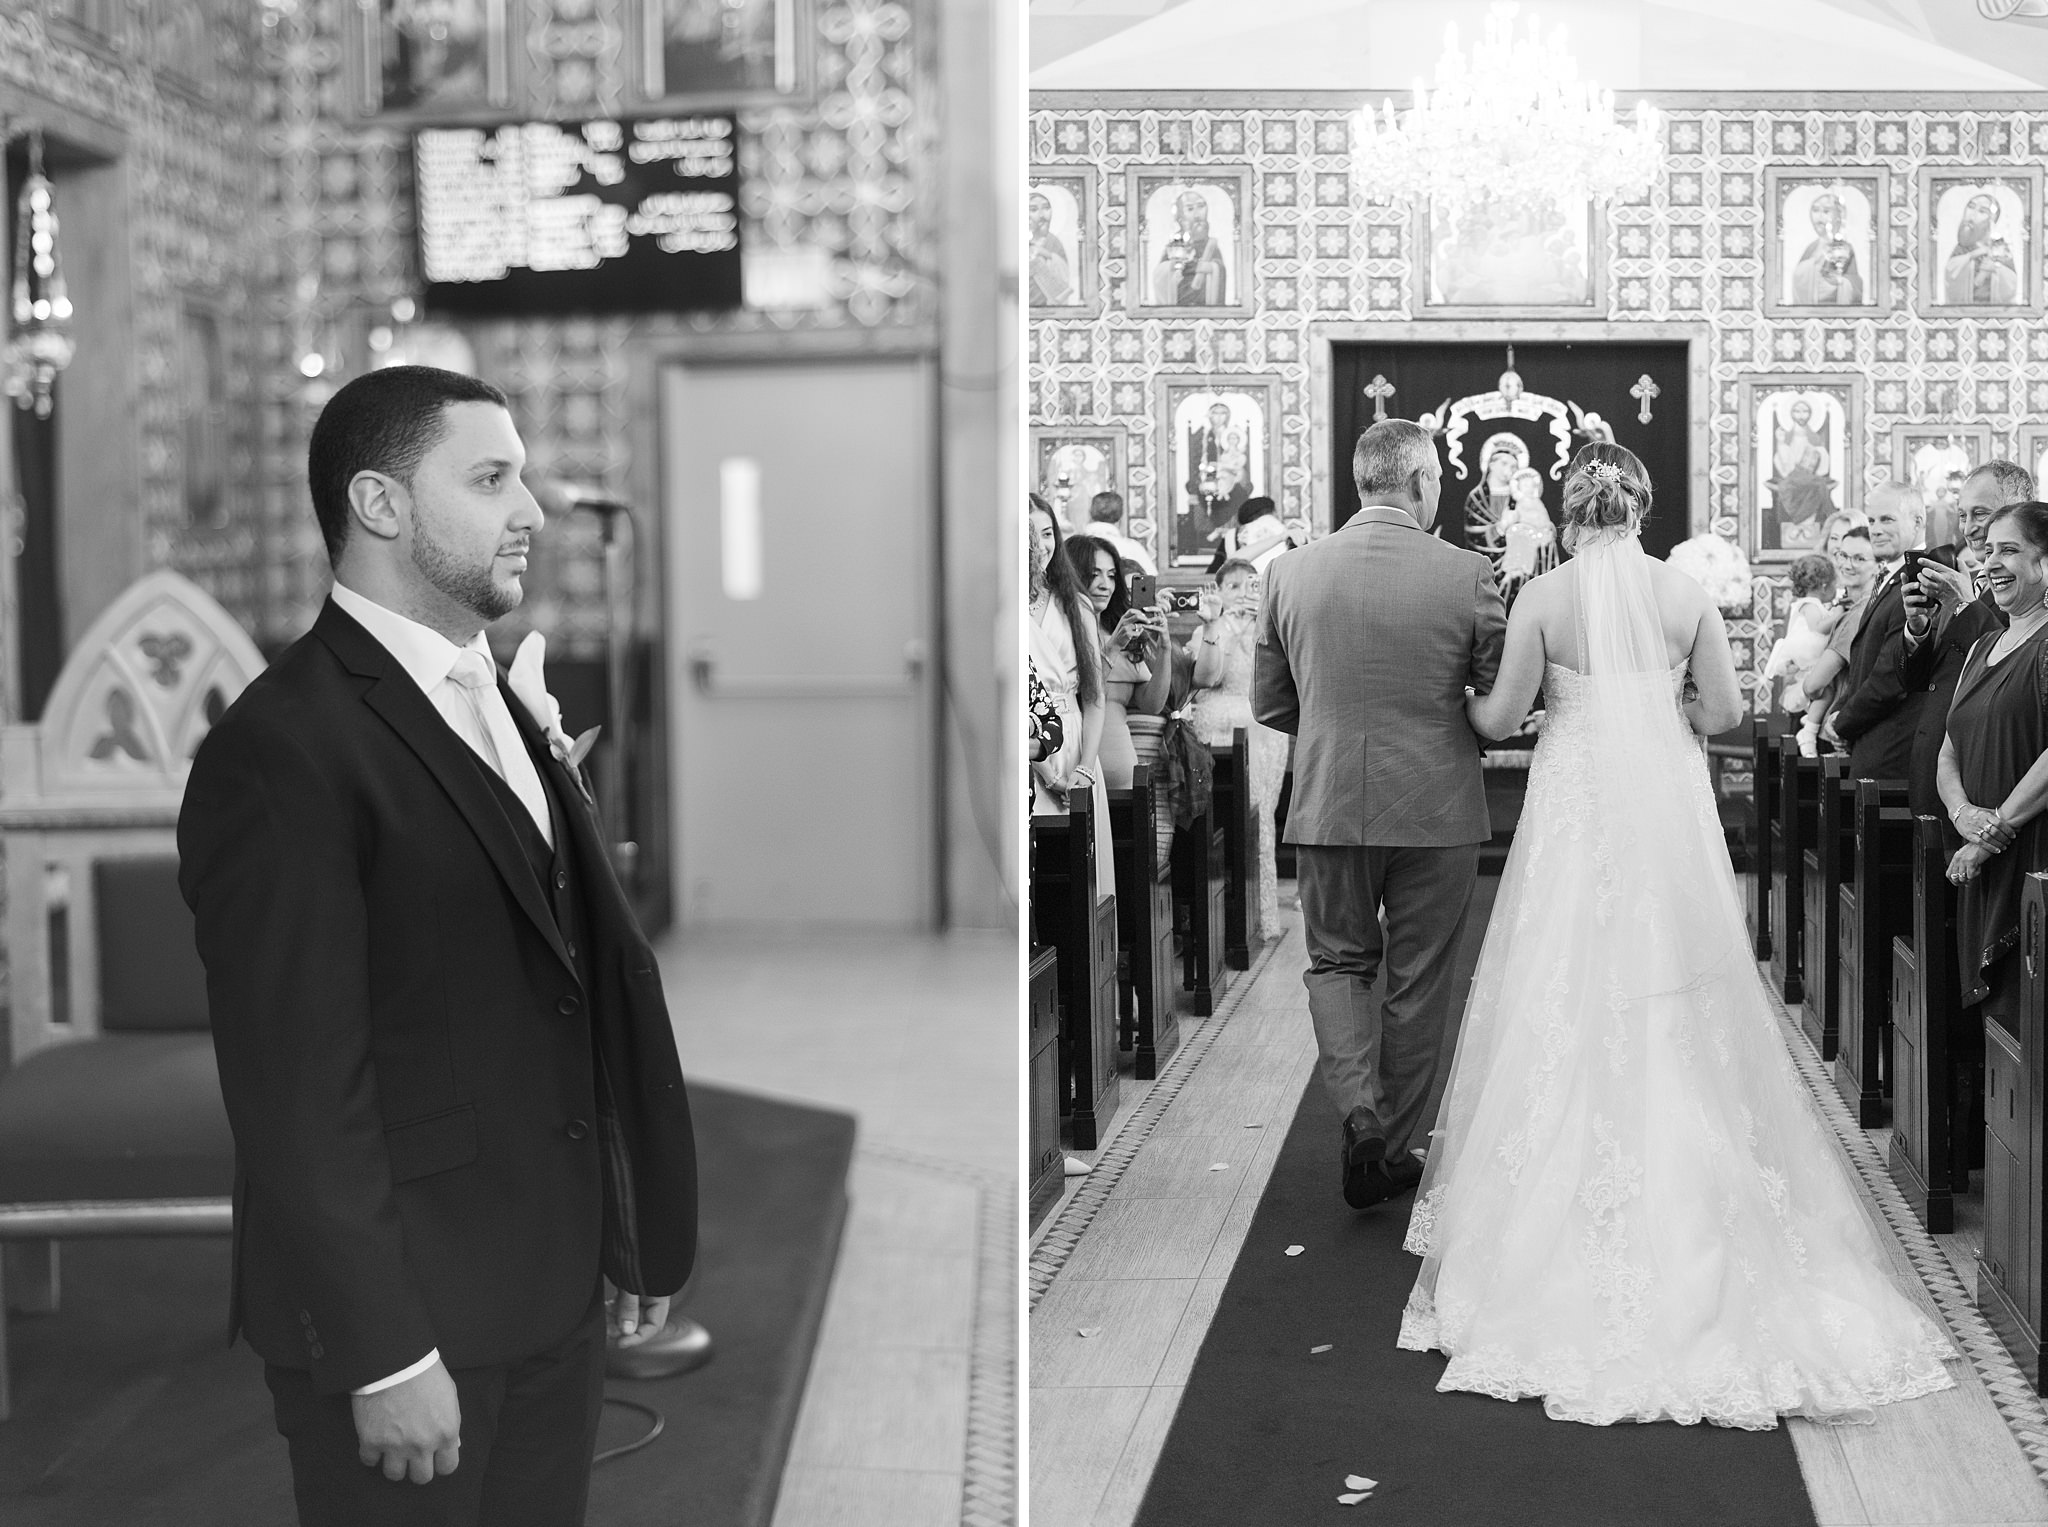 Summer Brookstreet Hotel Wedding | Ottawa Wedding | Wedding photos at St Mary’s Coptic Orthodox Church & Brookstreet Get more inspiration from this fun summertime wedding. #ottawawedding #weddingphotography #ottawaweddings